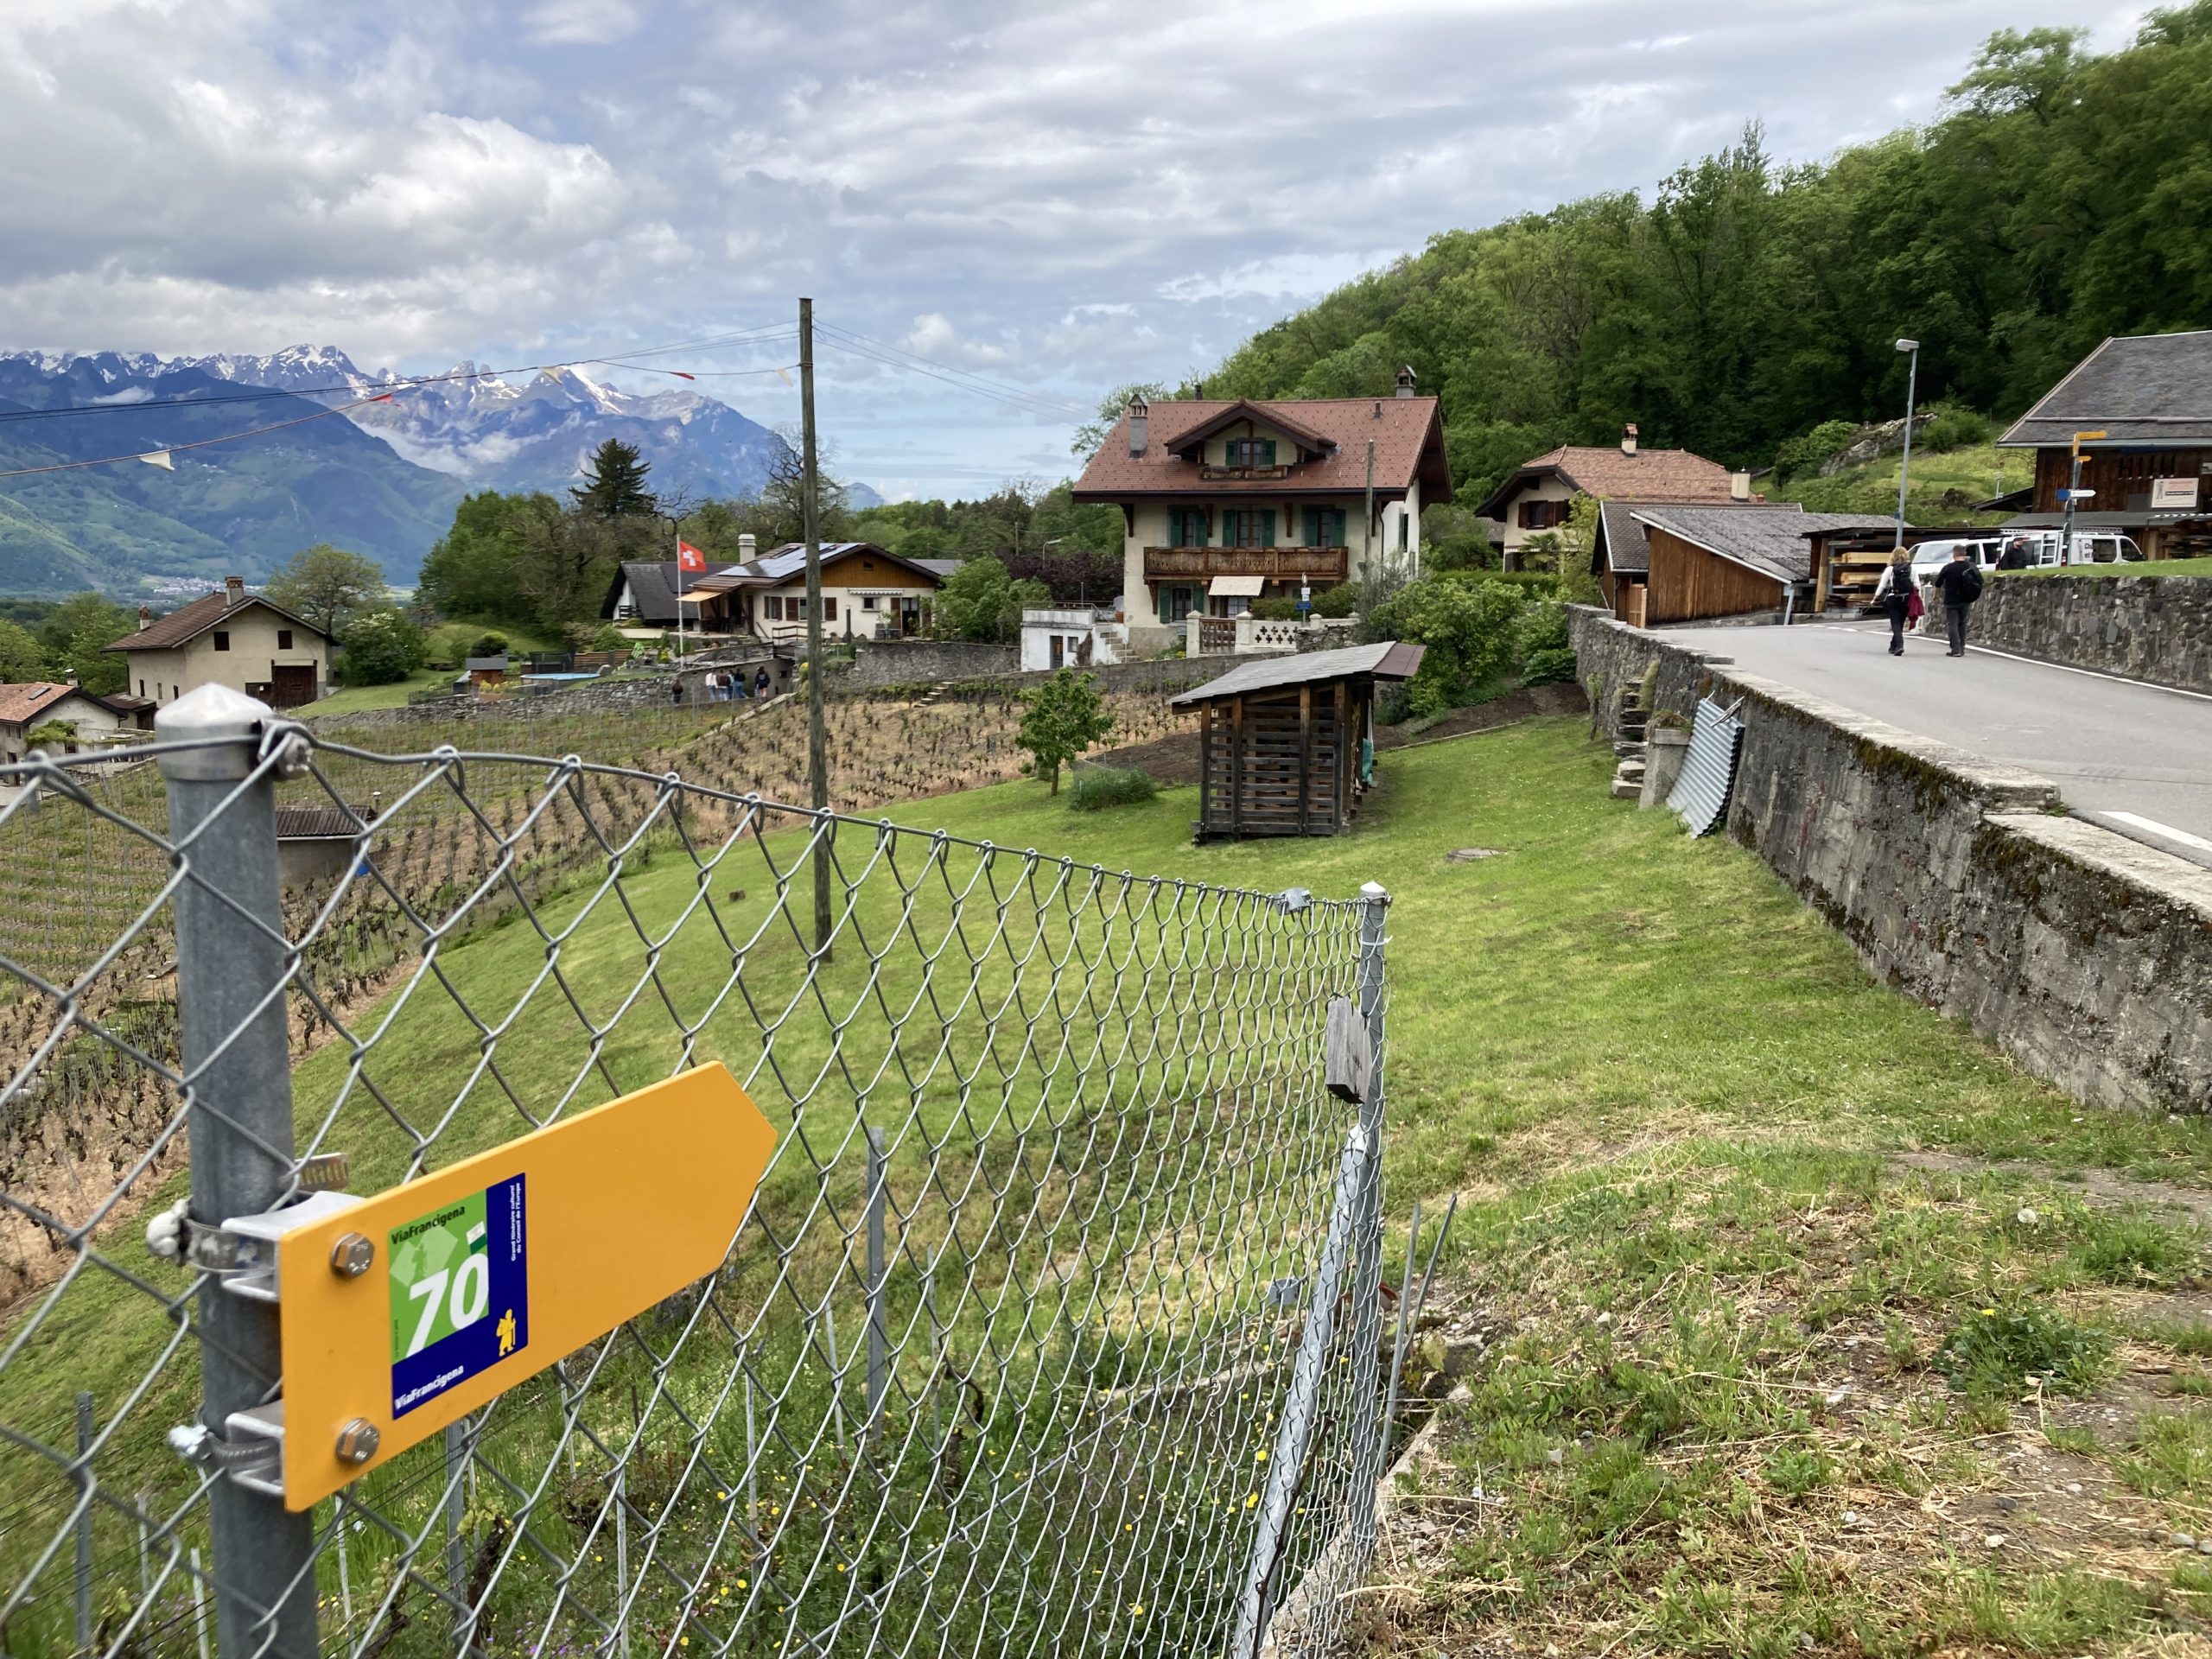 The Swiss Via Francigena Route